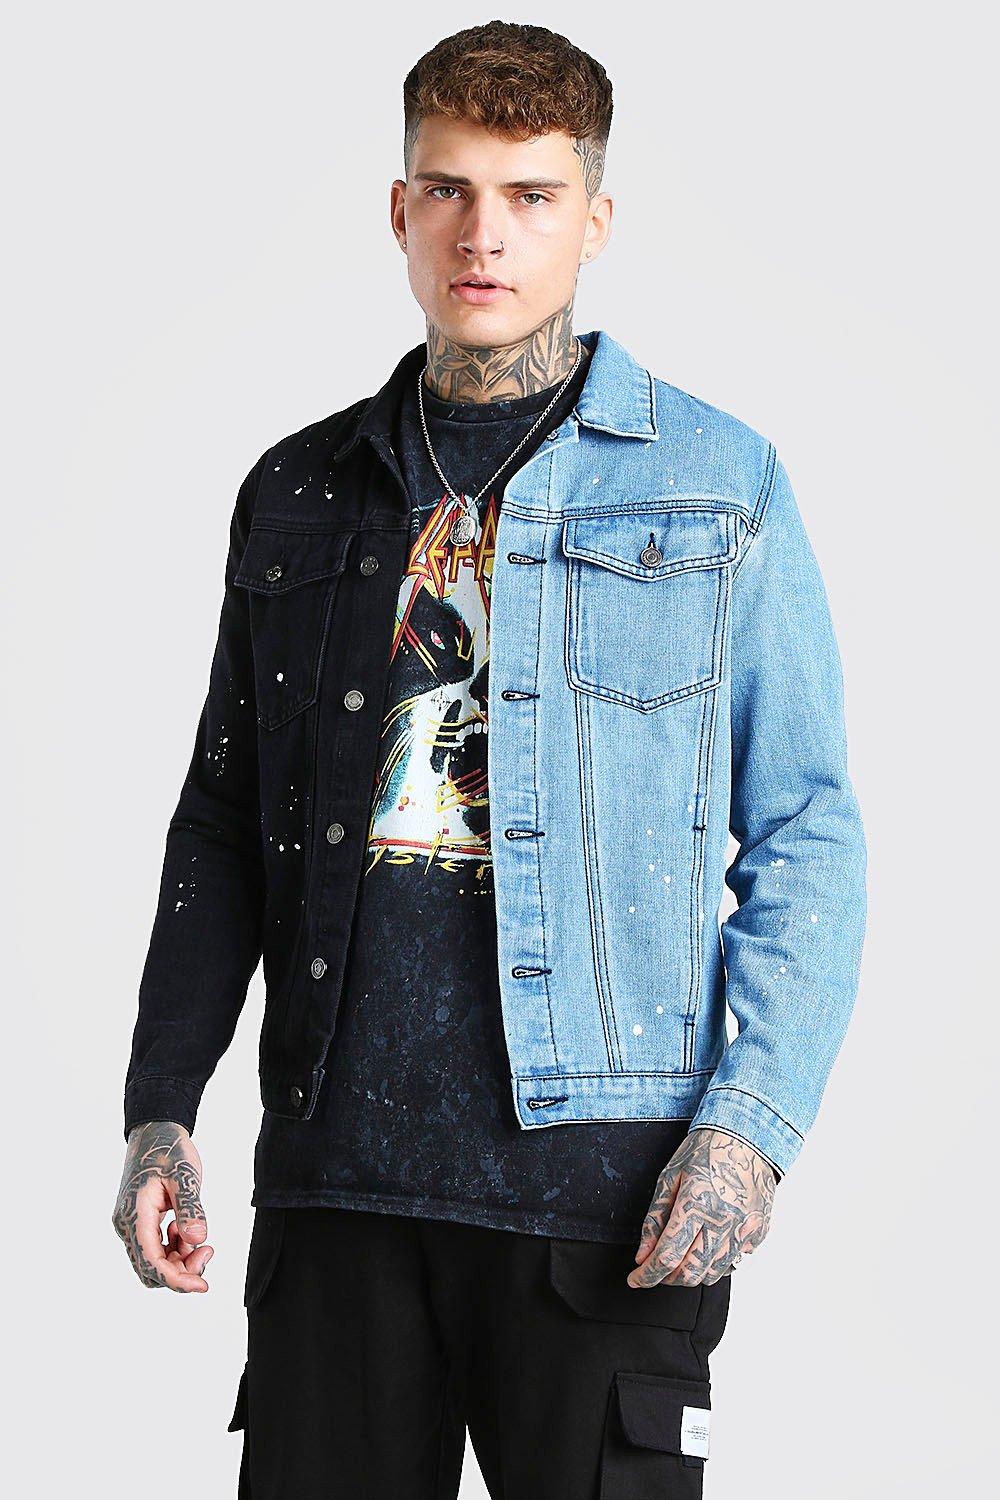 jean jacket half black half blue